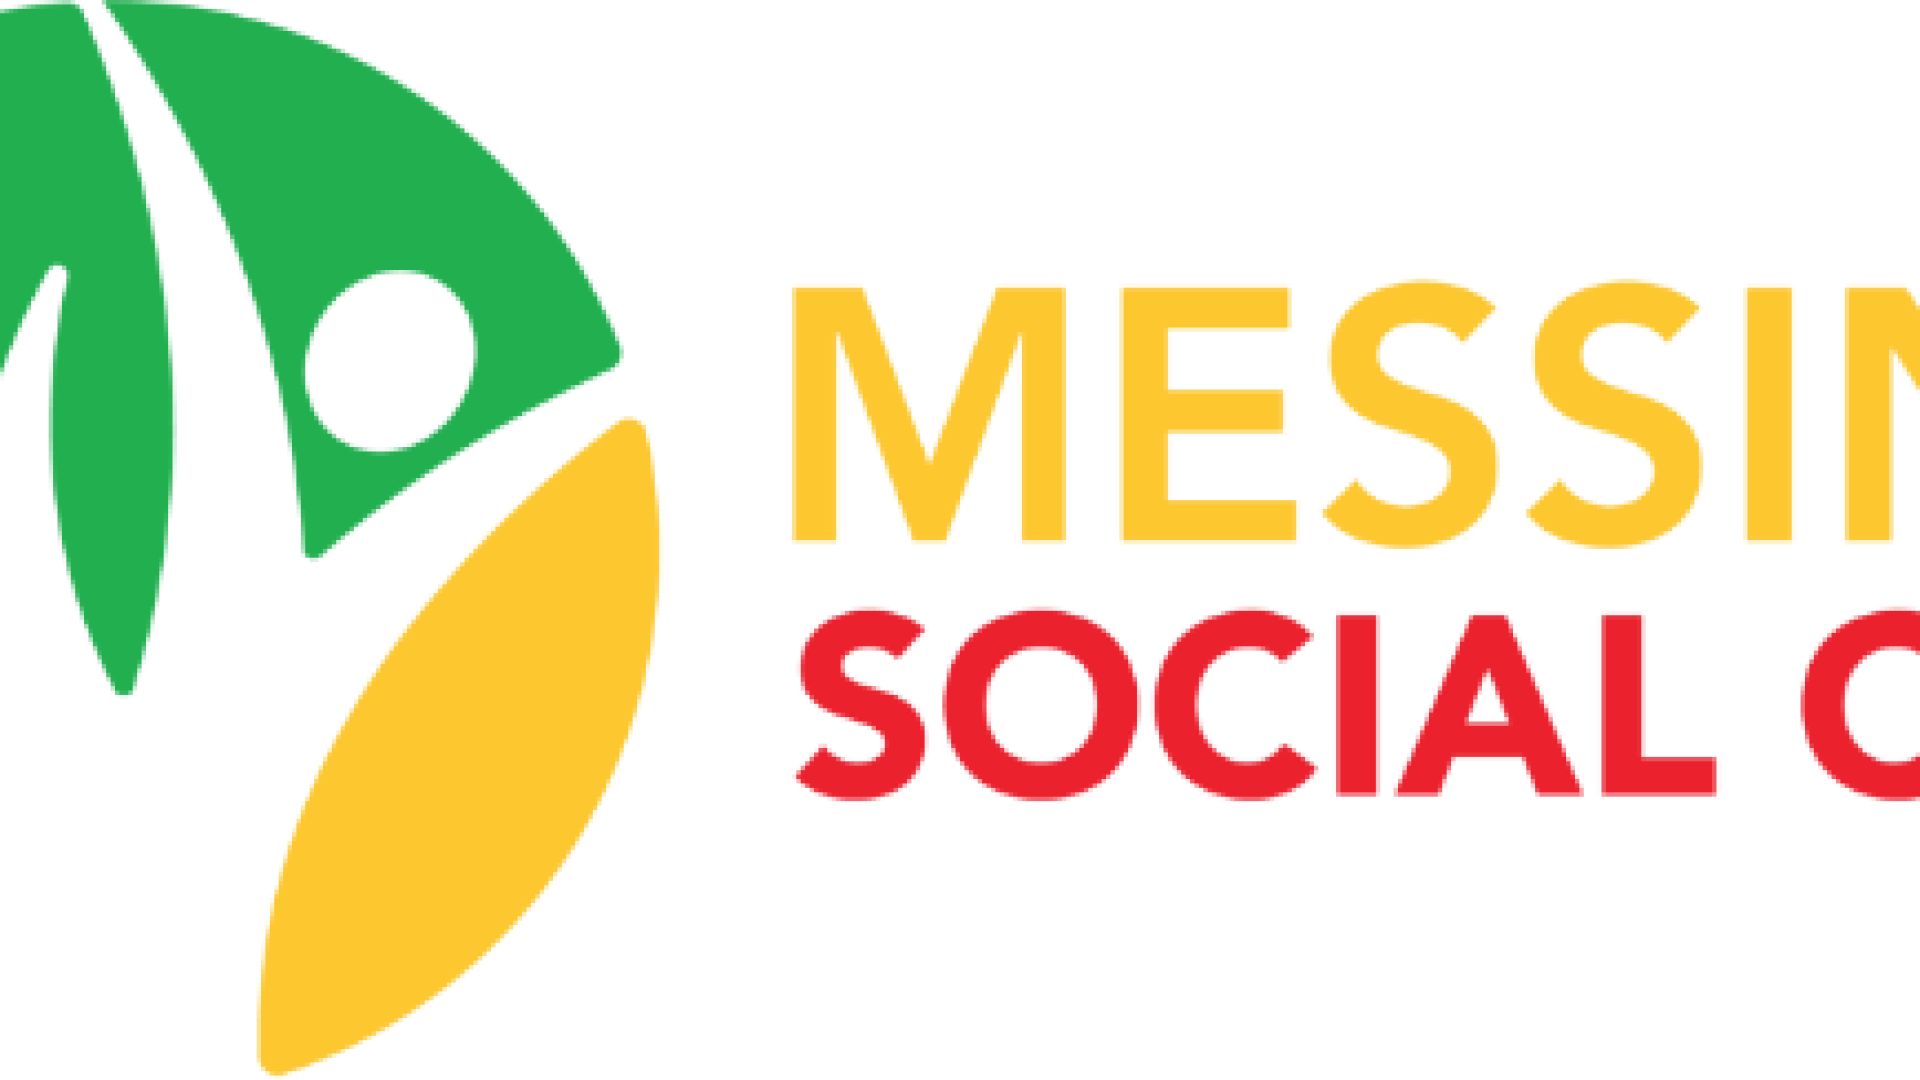 messina social city